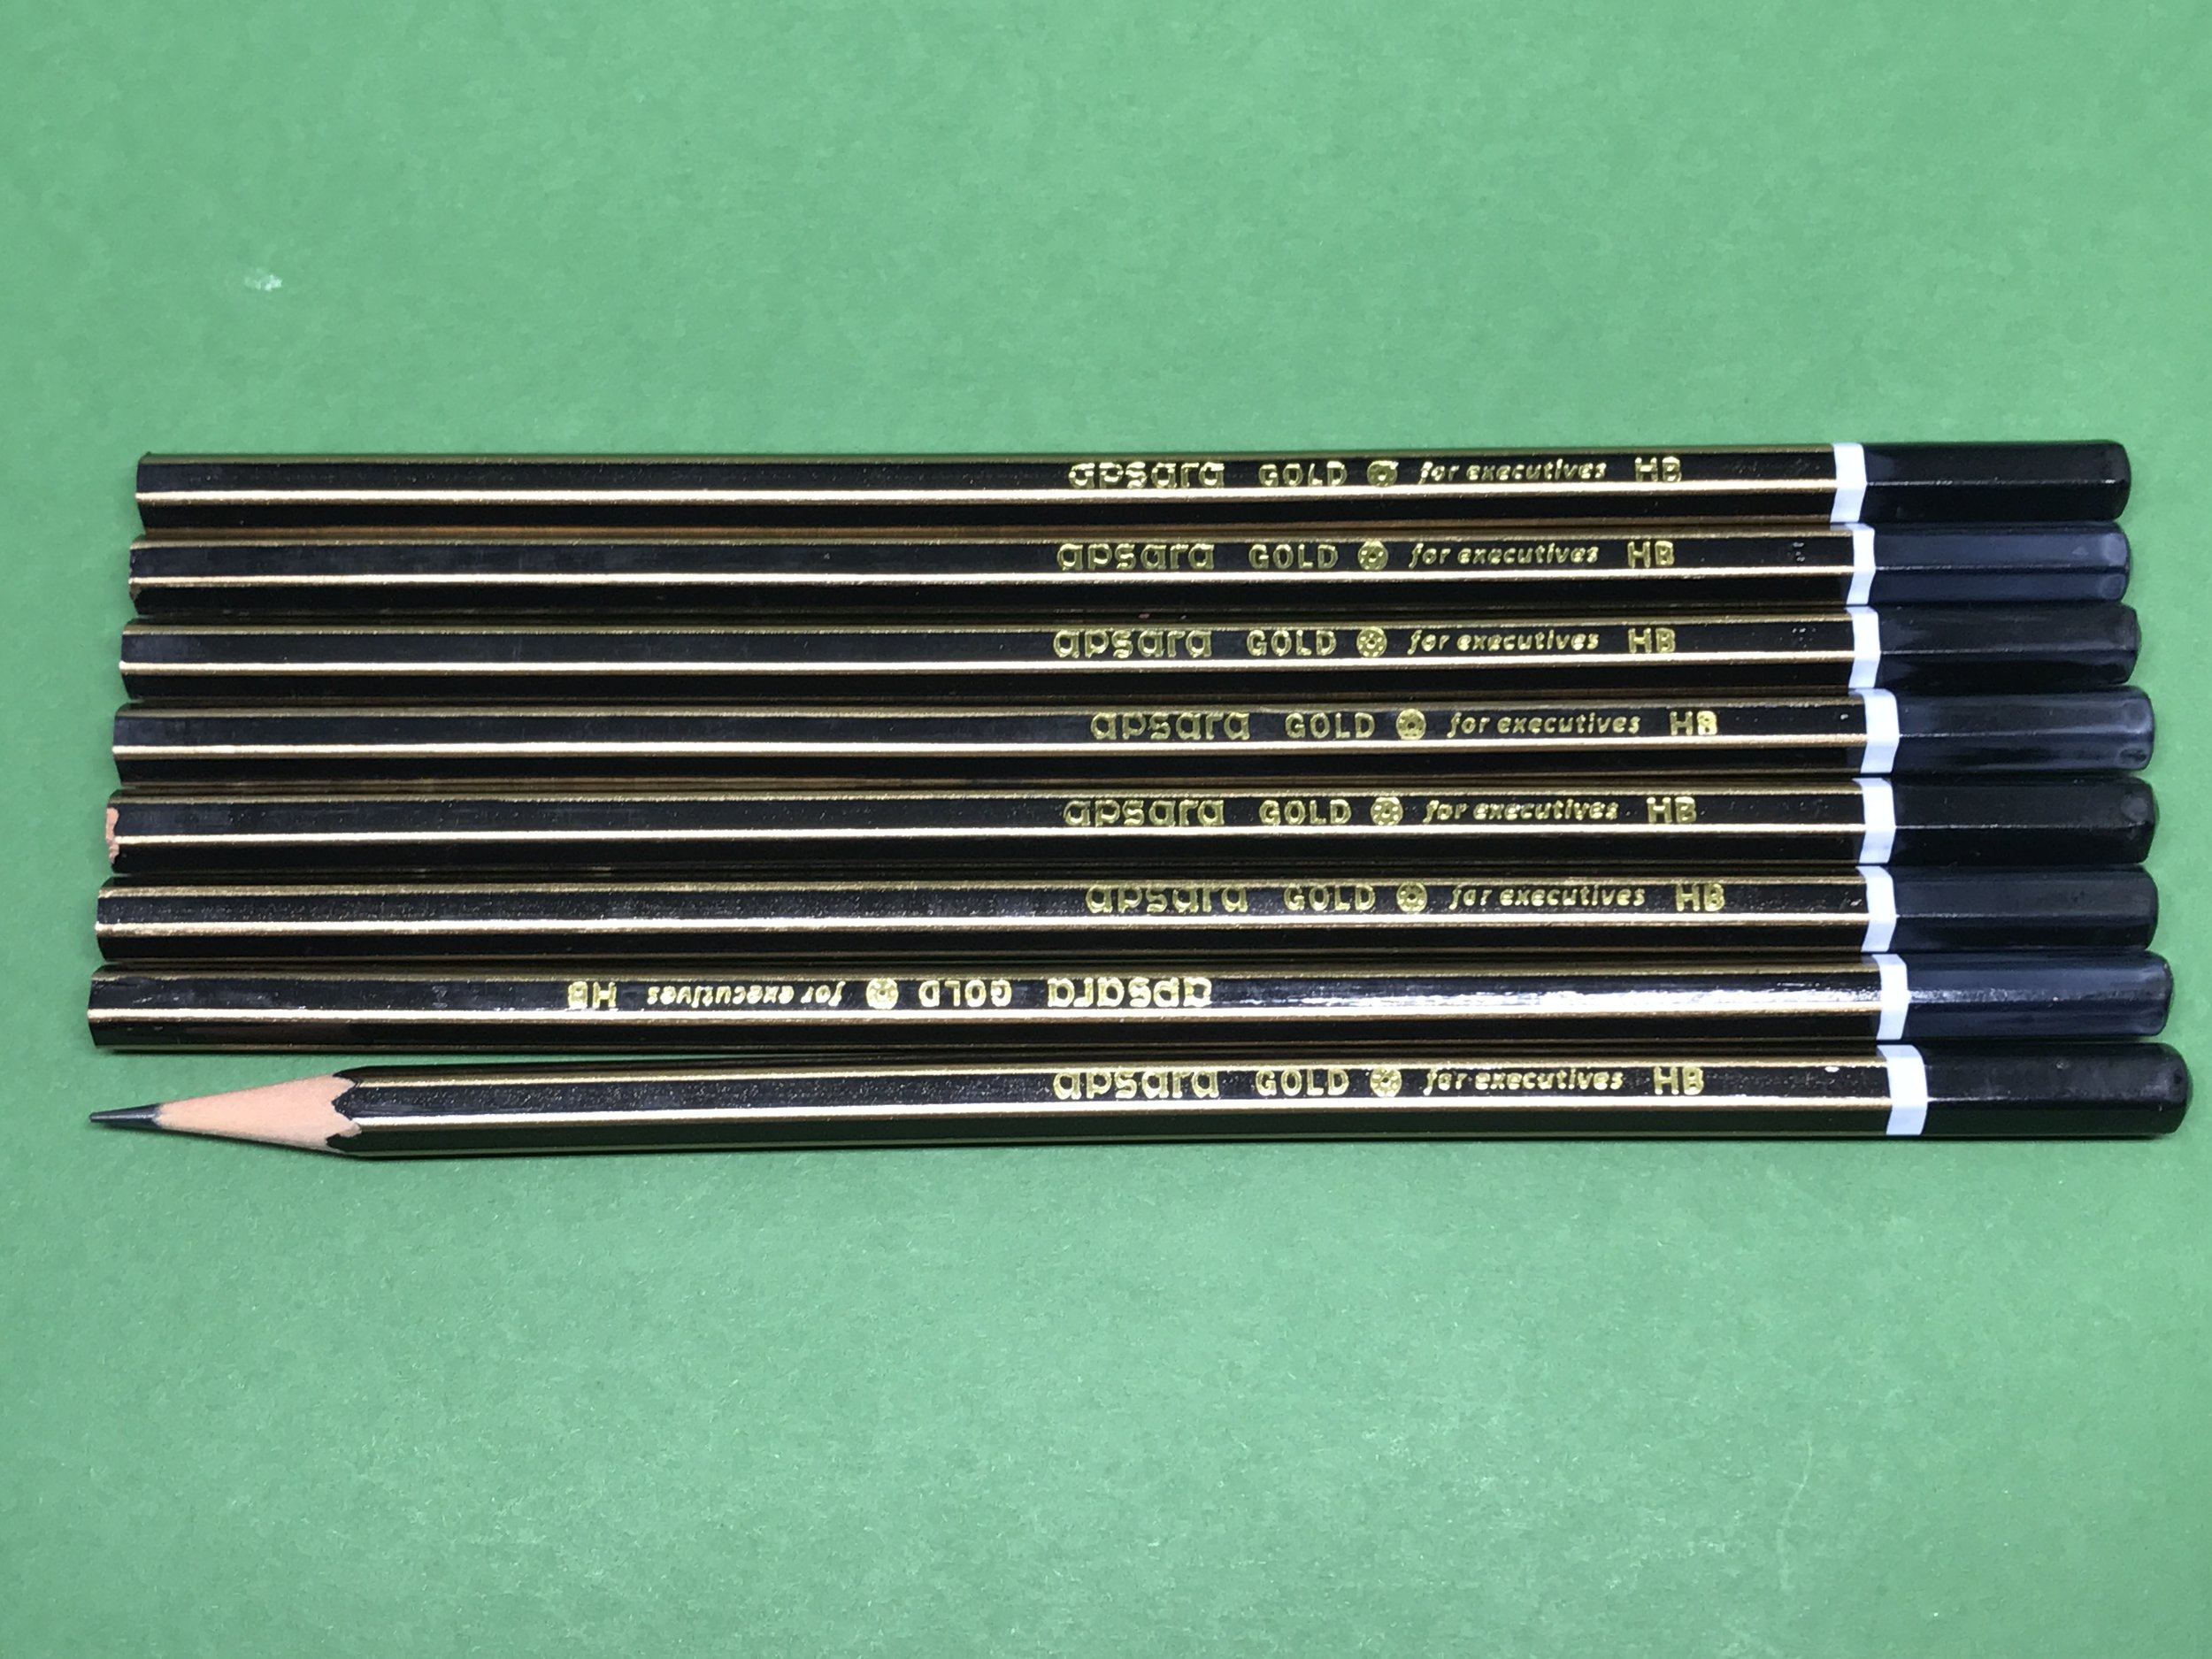 10x Apsara REGAL GOLD Pencil extra dark for dark writing school home office use 